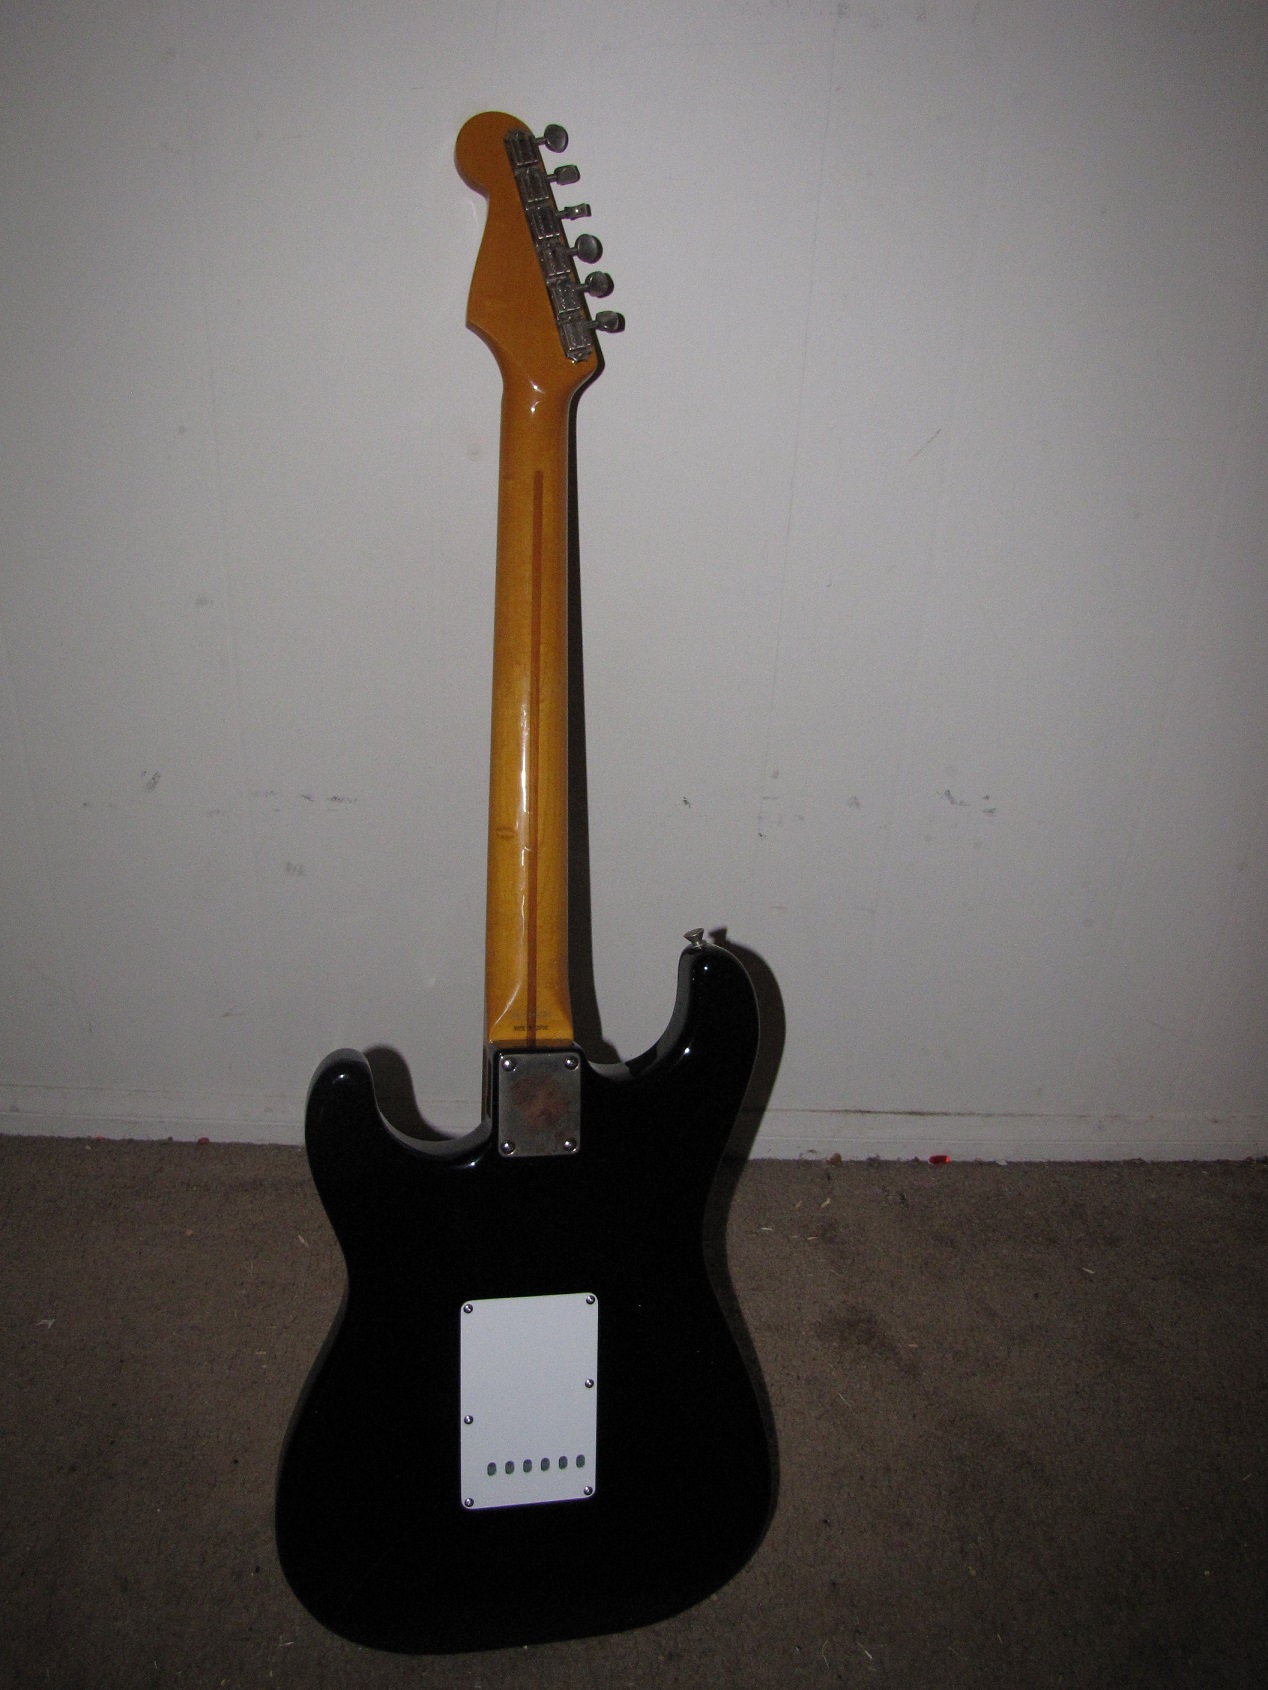 Fender Stratocaster 1990 Blackie Guitar For Sale Dan Yablonka Guitars